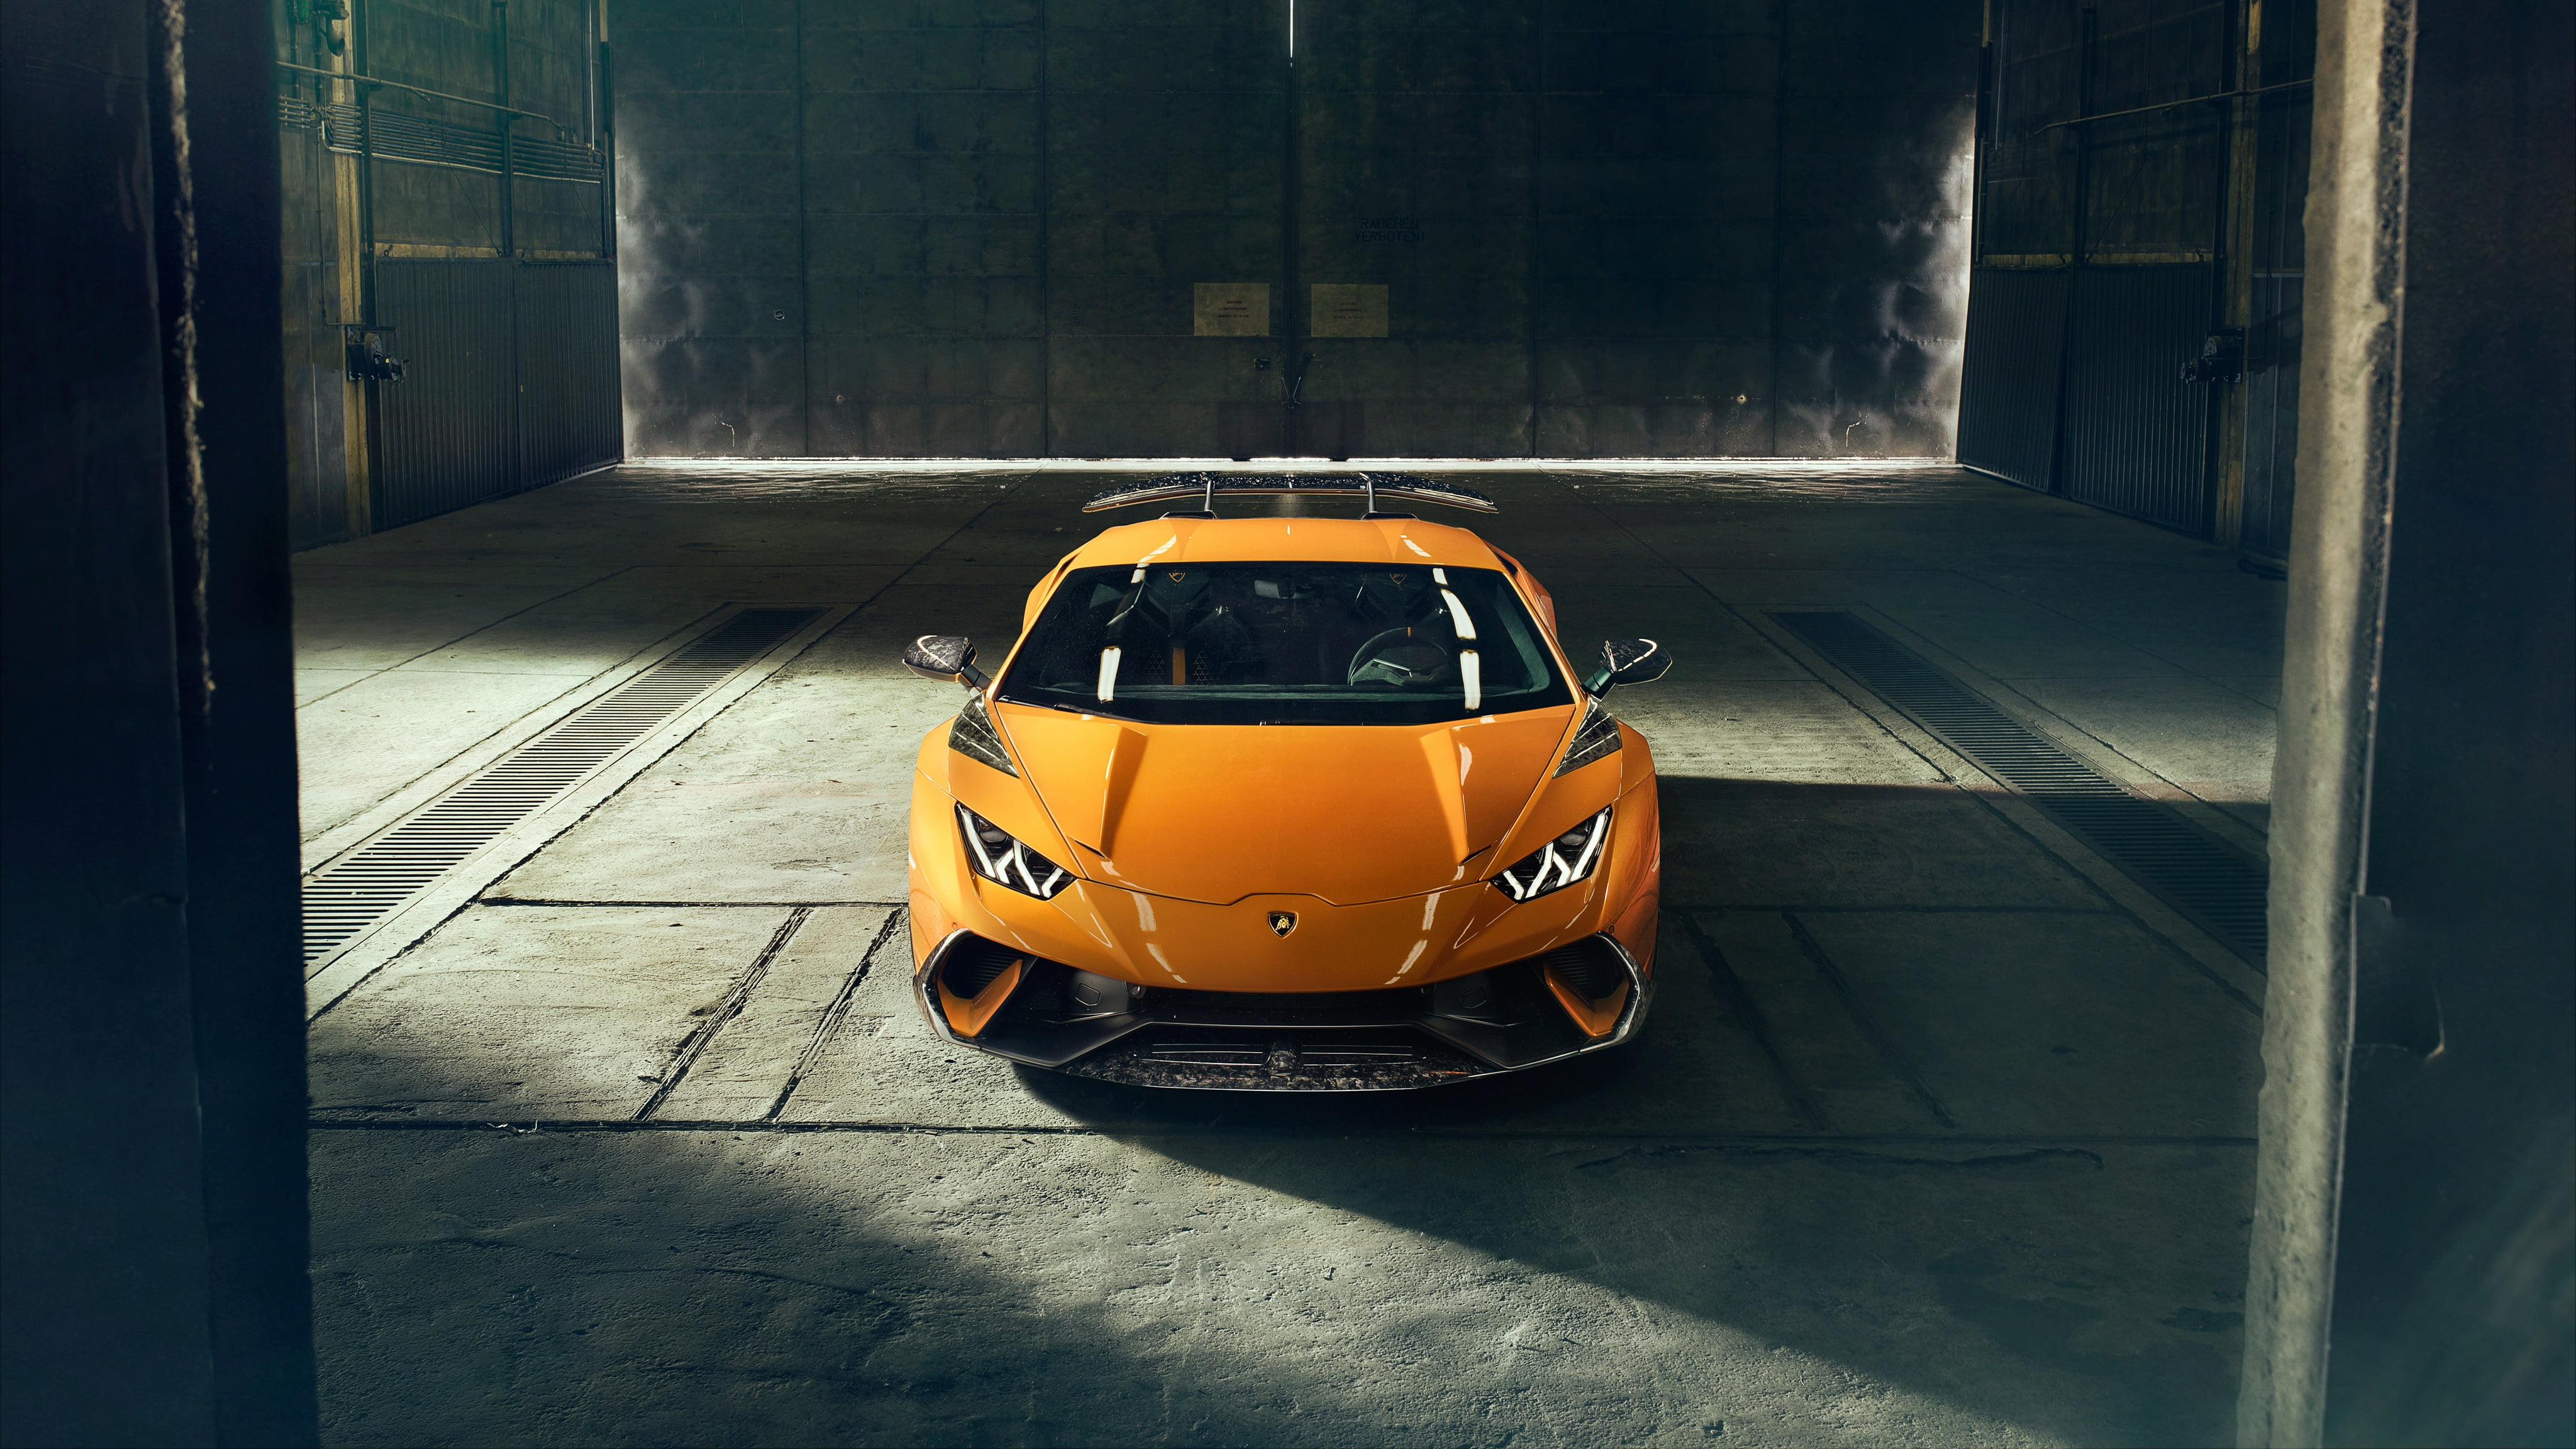 Super Car , hangar, Lamborghini Huracan, mode of transportation